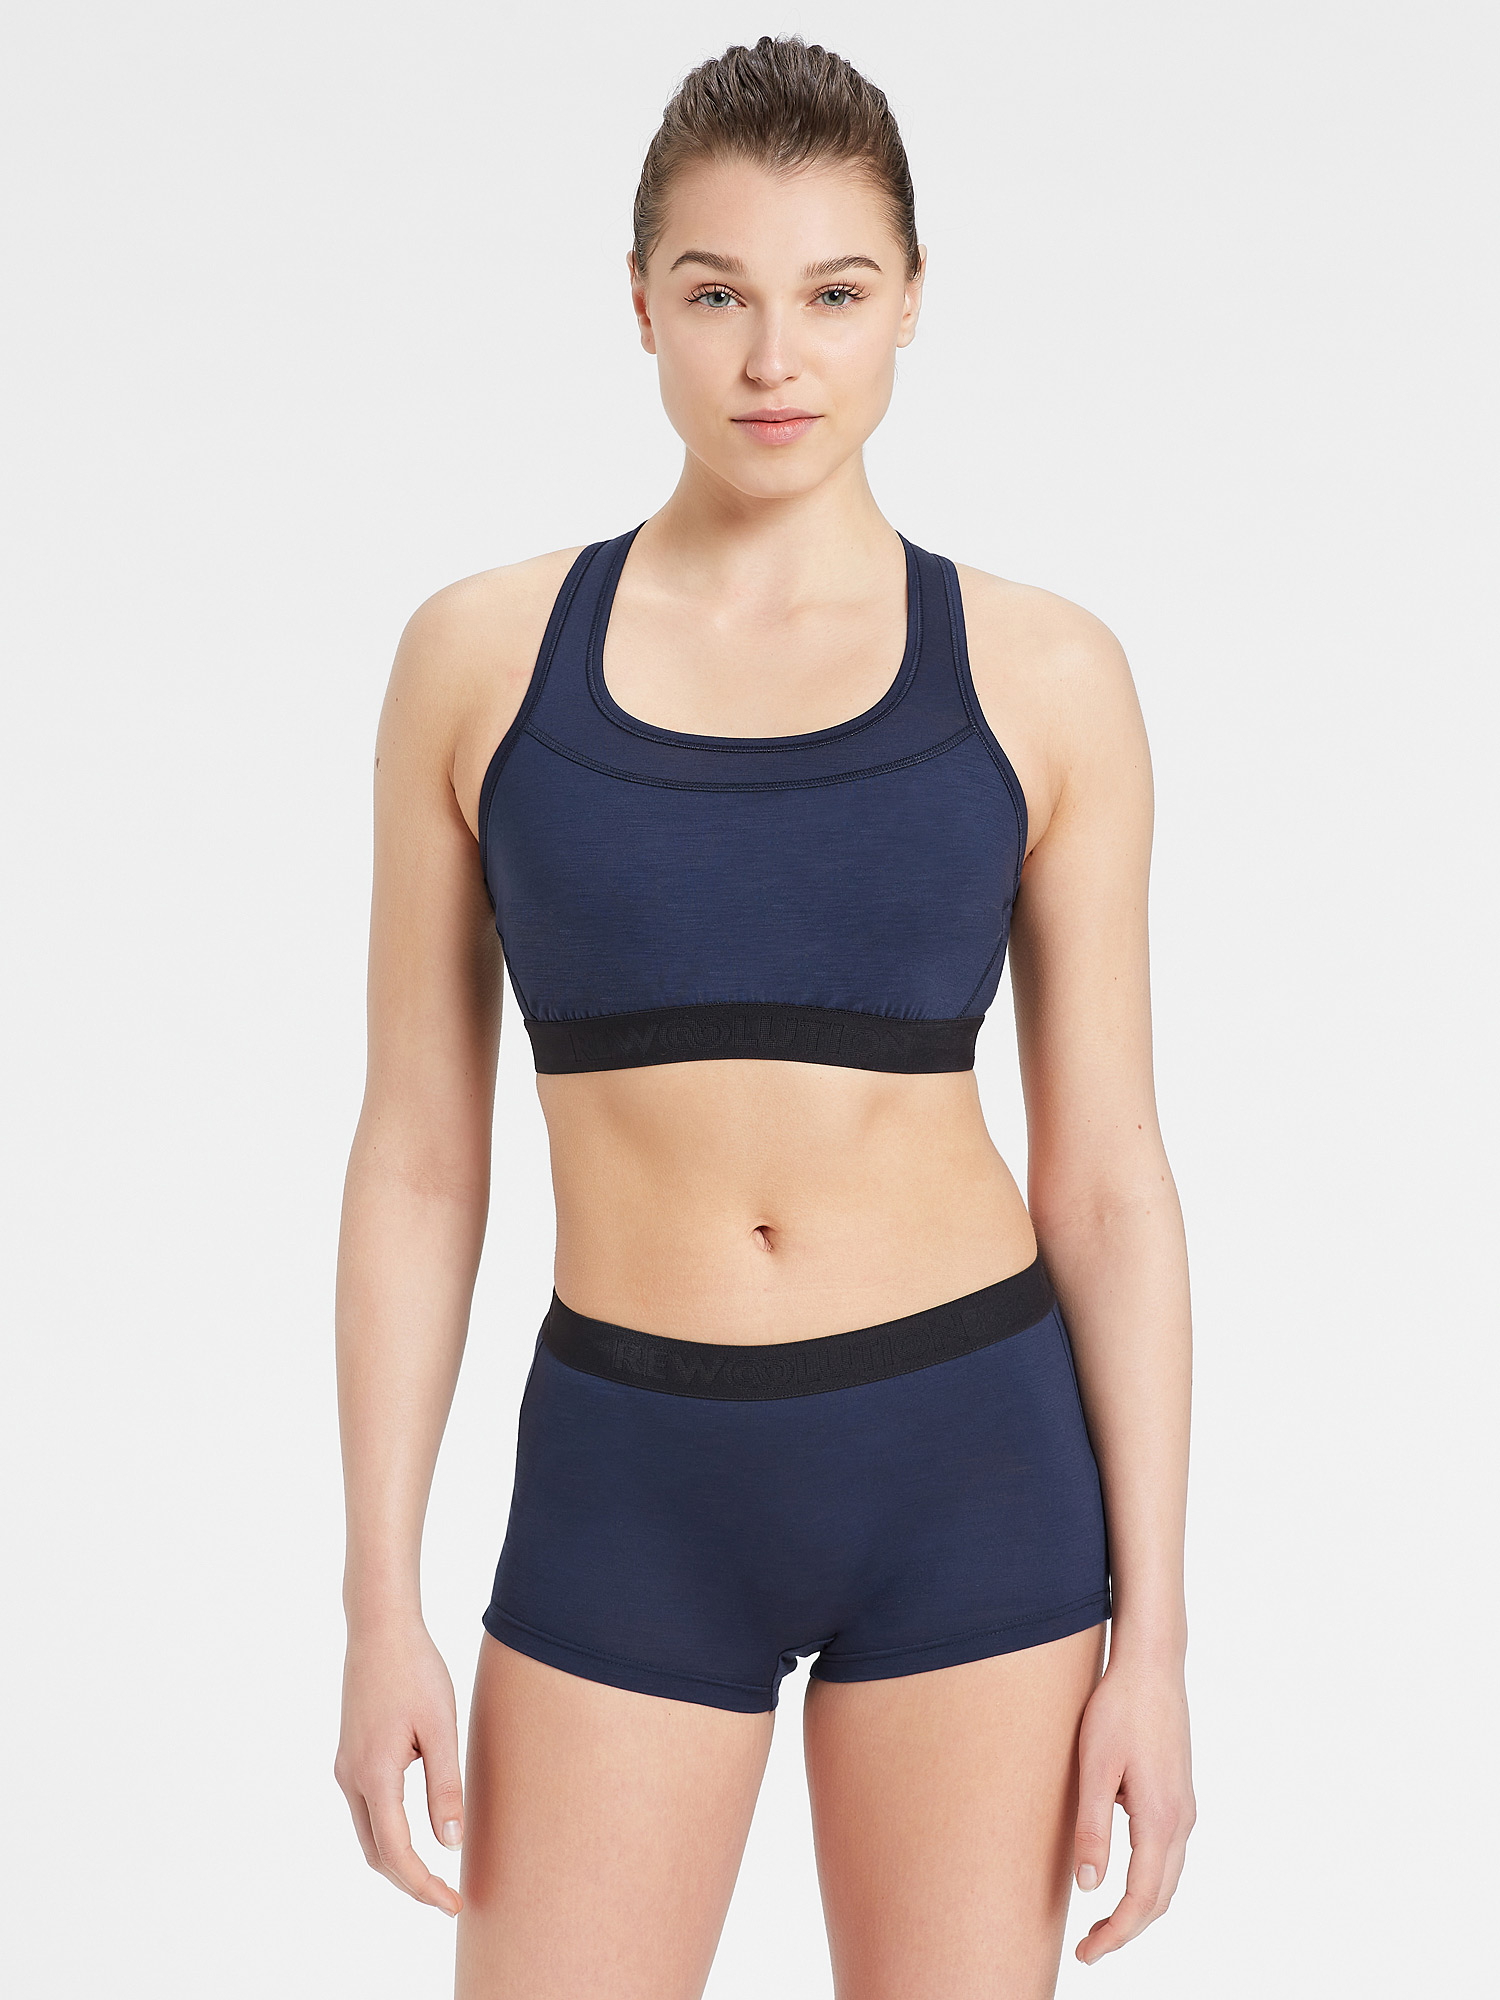 OLYMPIC - blue merino jersey 140 gr sports bra for woman, Rewoolution